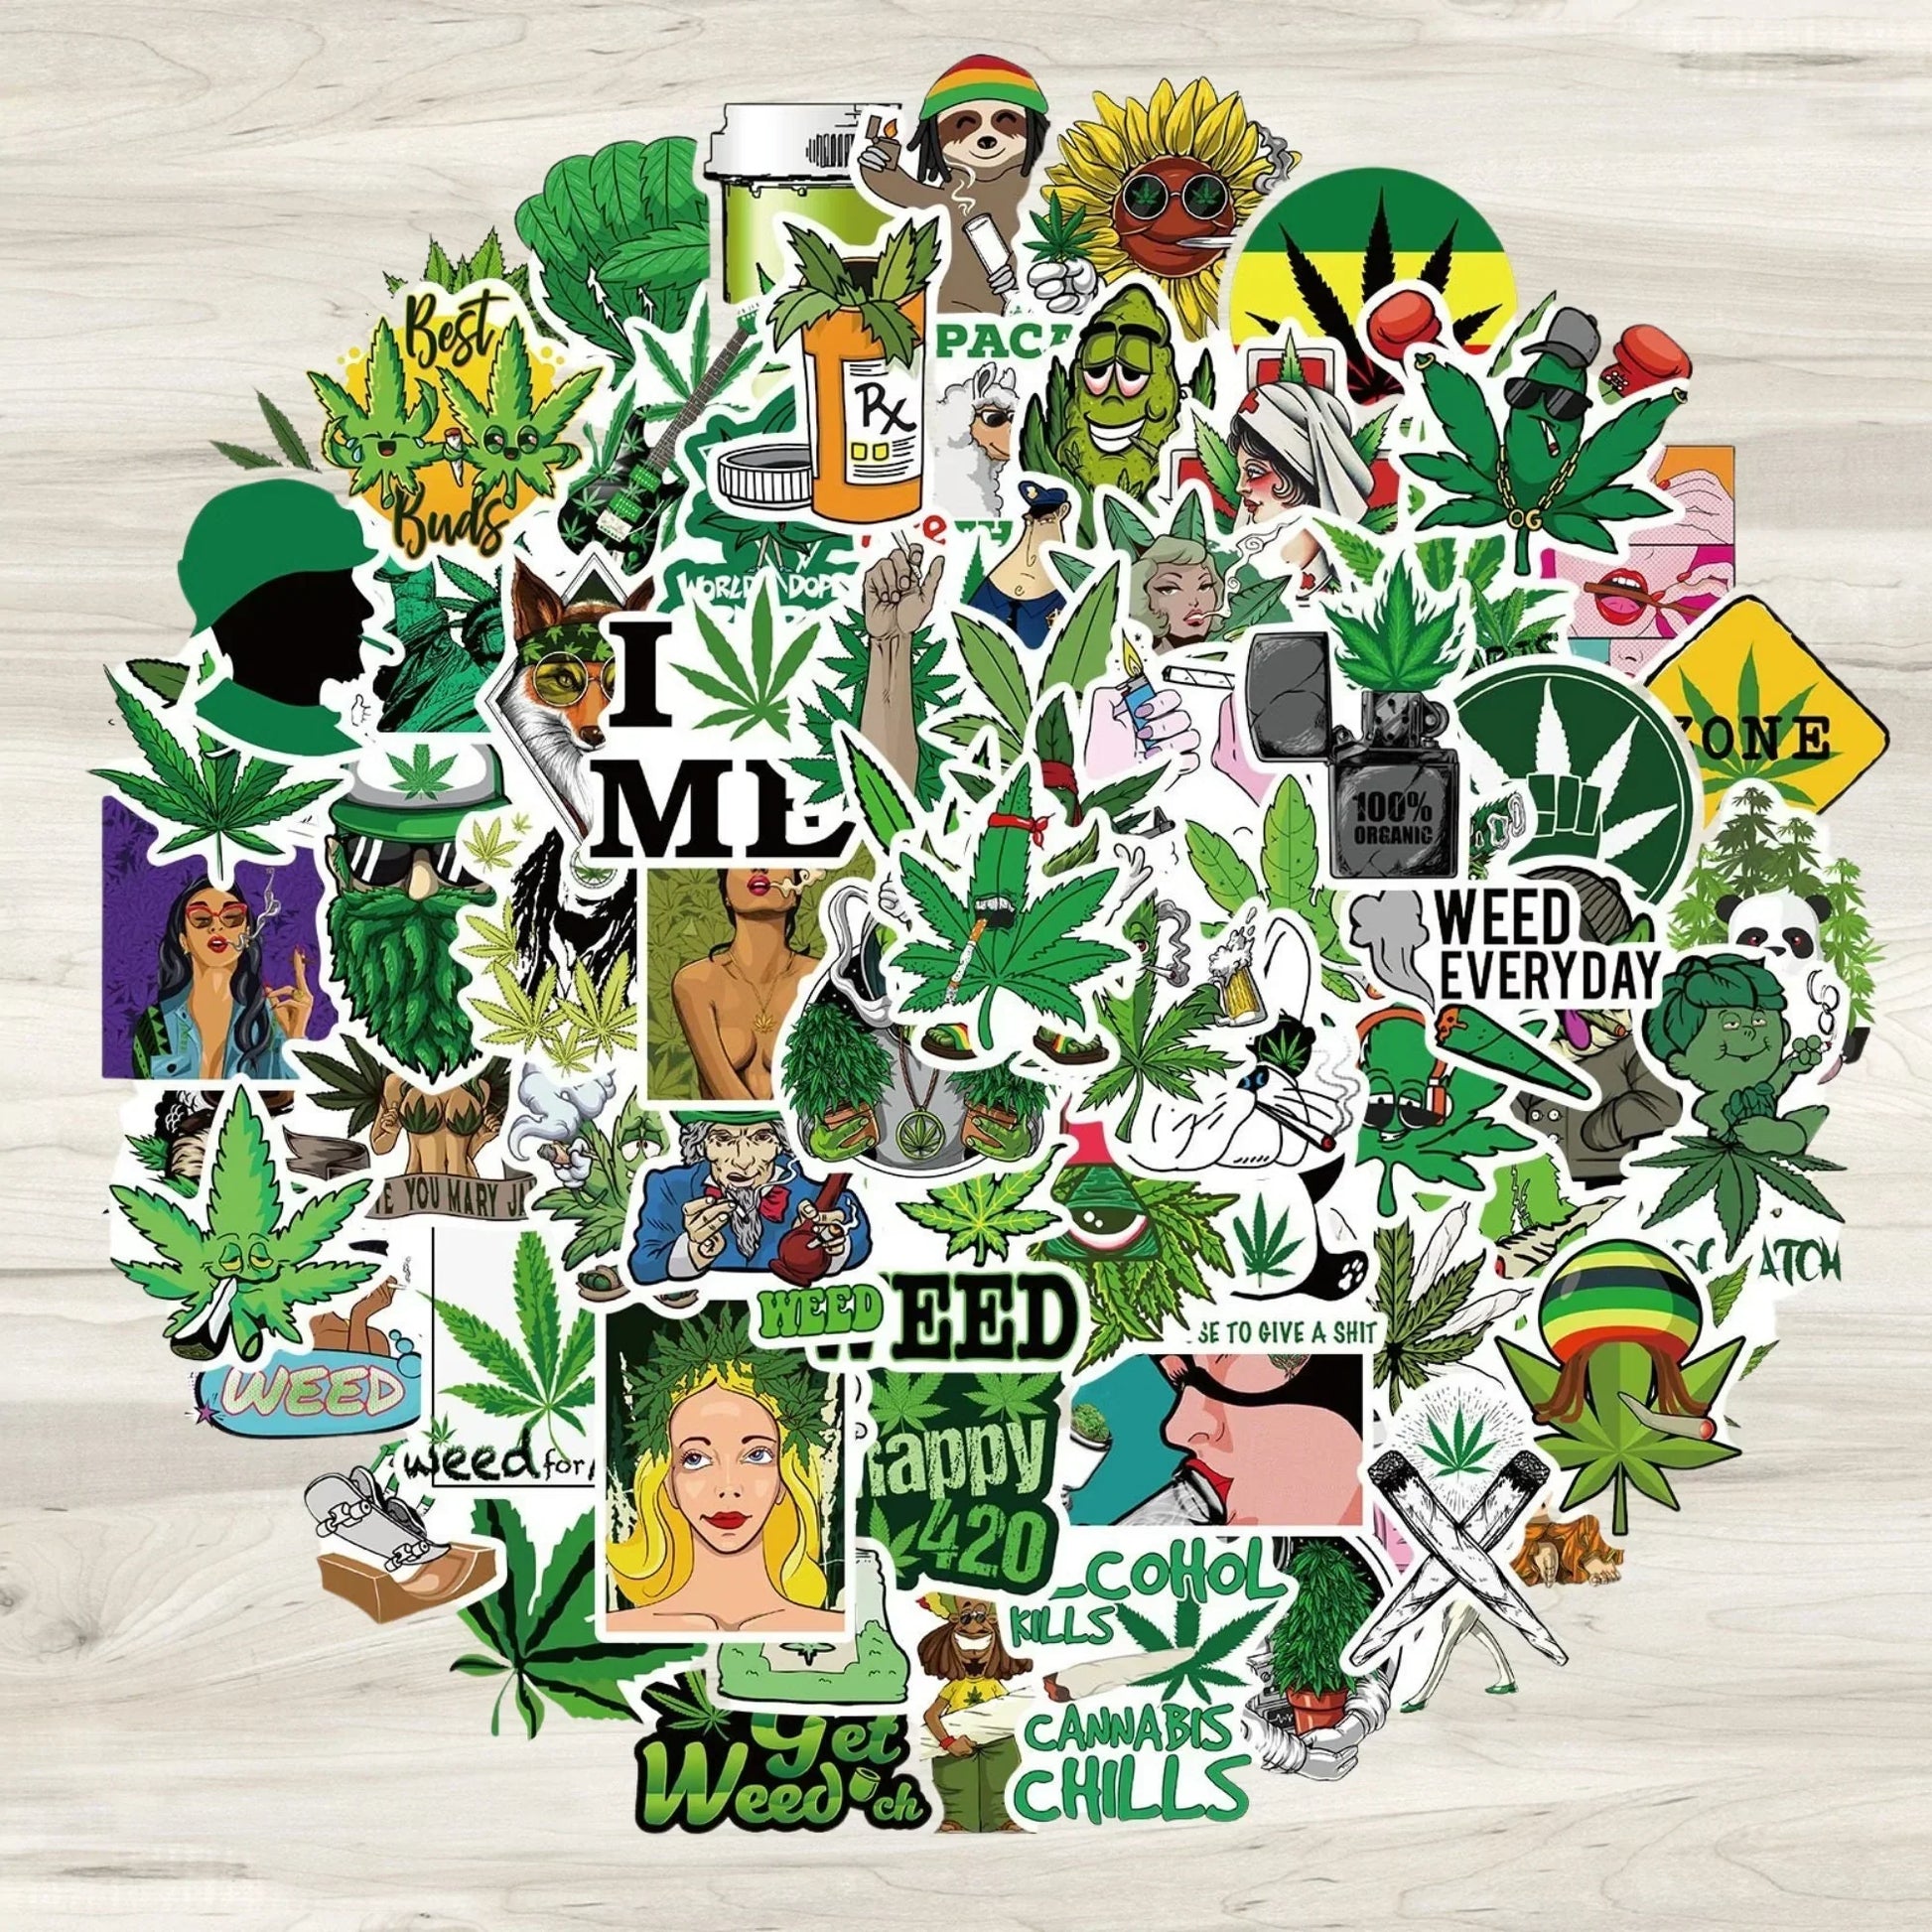 50 Stoner Stickers, Weed Stickers, Weed Art, Stoner Decor, Stashjar, Grinder, Rolling Tray, Stashbox, Laptop Stickers, Stoner Accessories HMDesignStudioUS